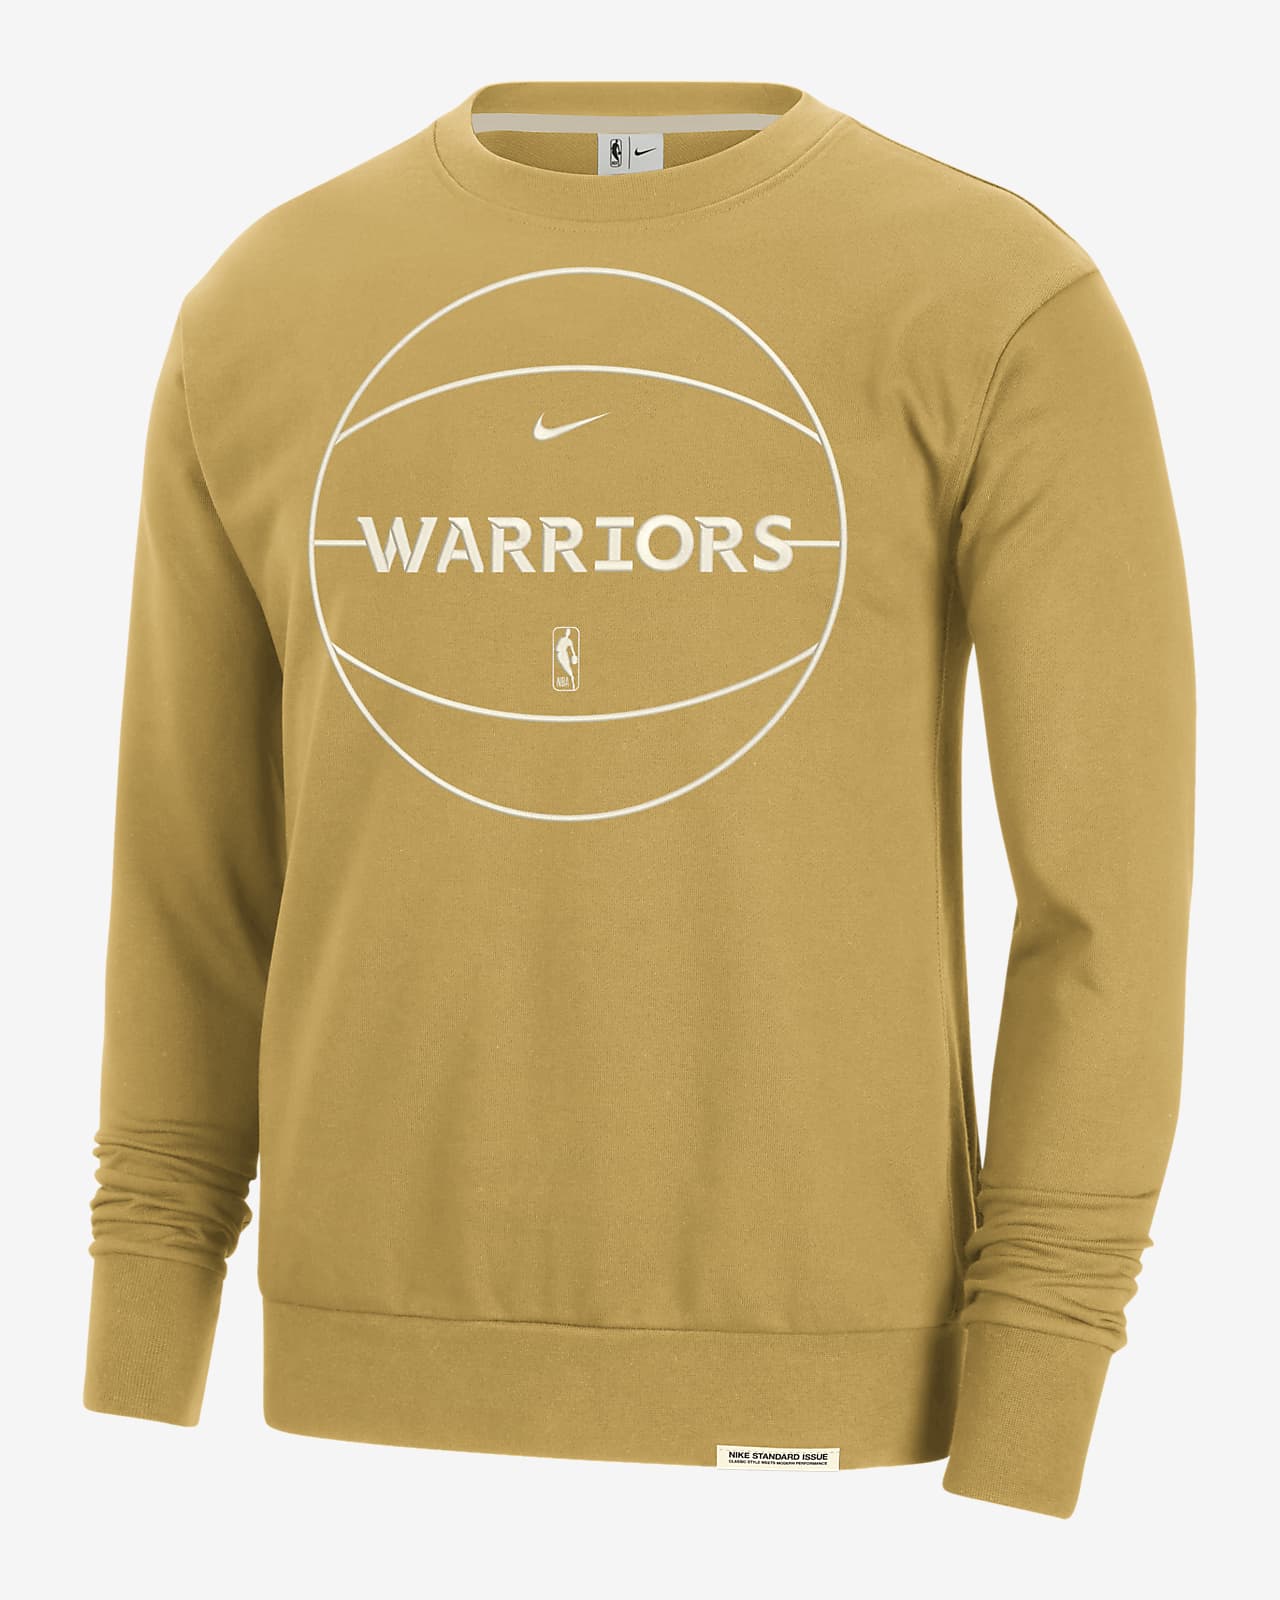 Golden State Warriors Standard Issue Men\'s Nike Dri-FIT NBA Sweatshirt.